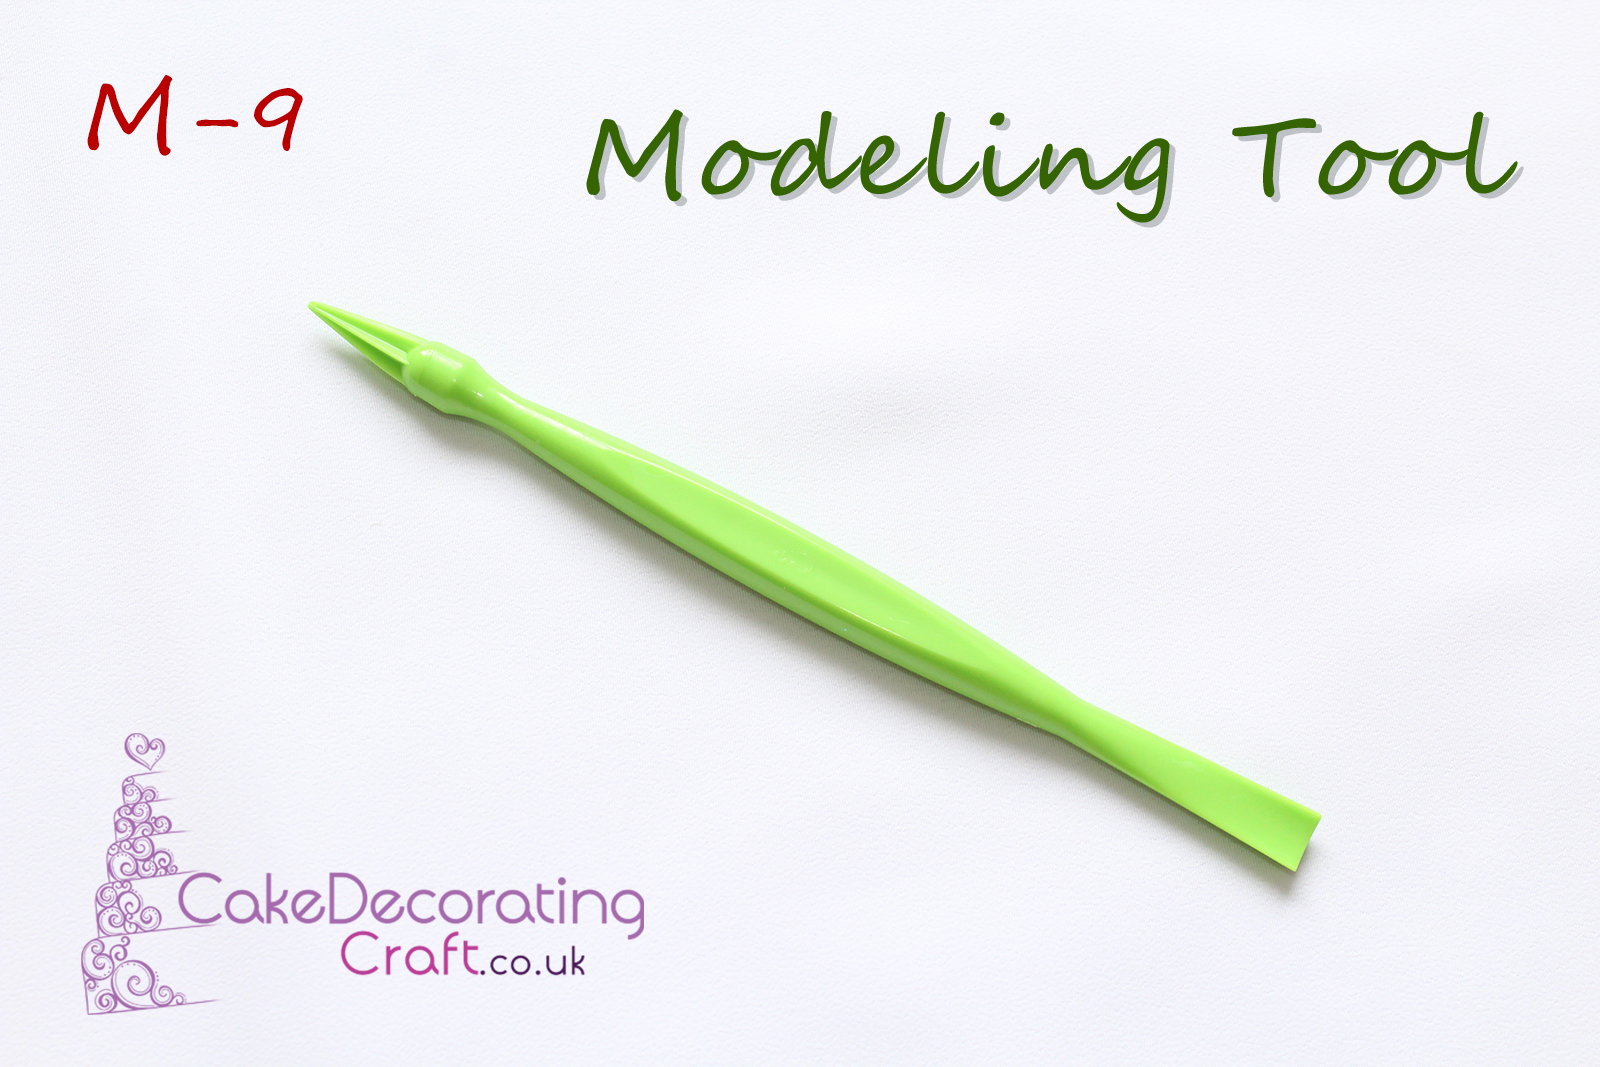 Cake Decorating Craft Modelling Tools | Double Ended | Gum Paste Flower Paste Modelling Sugar Paste Craft | M-9